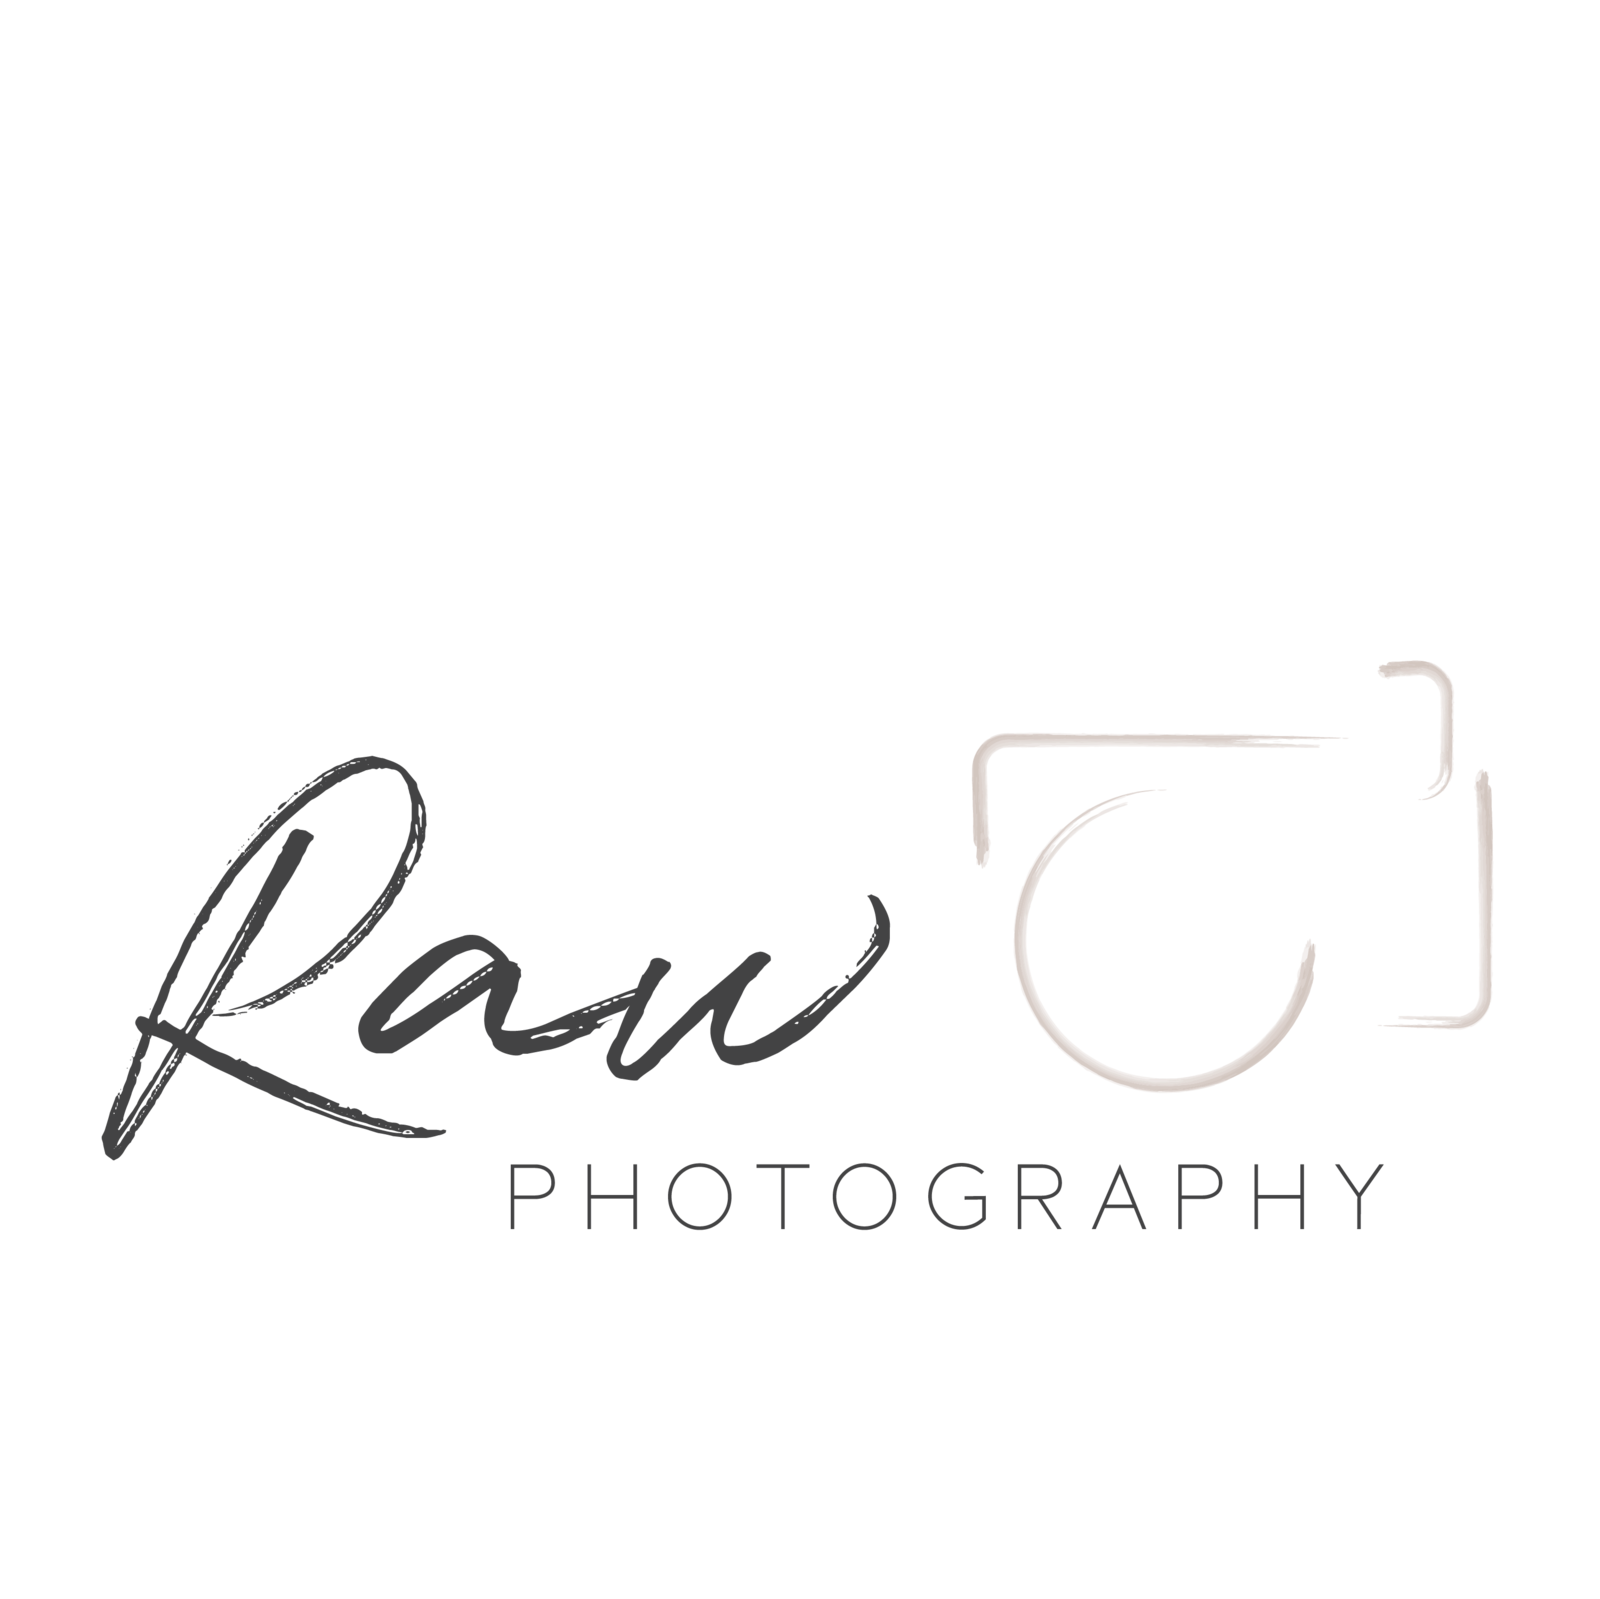 raw photography branding_primary logo